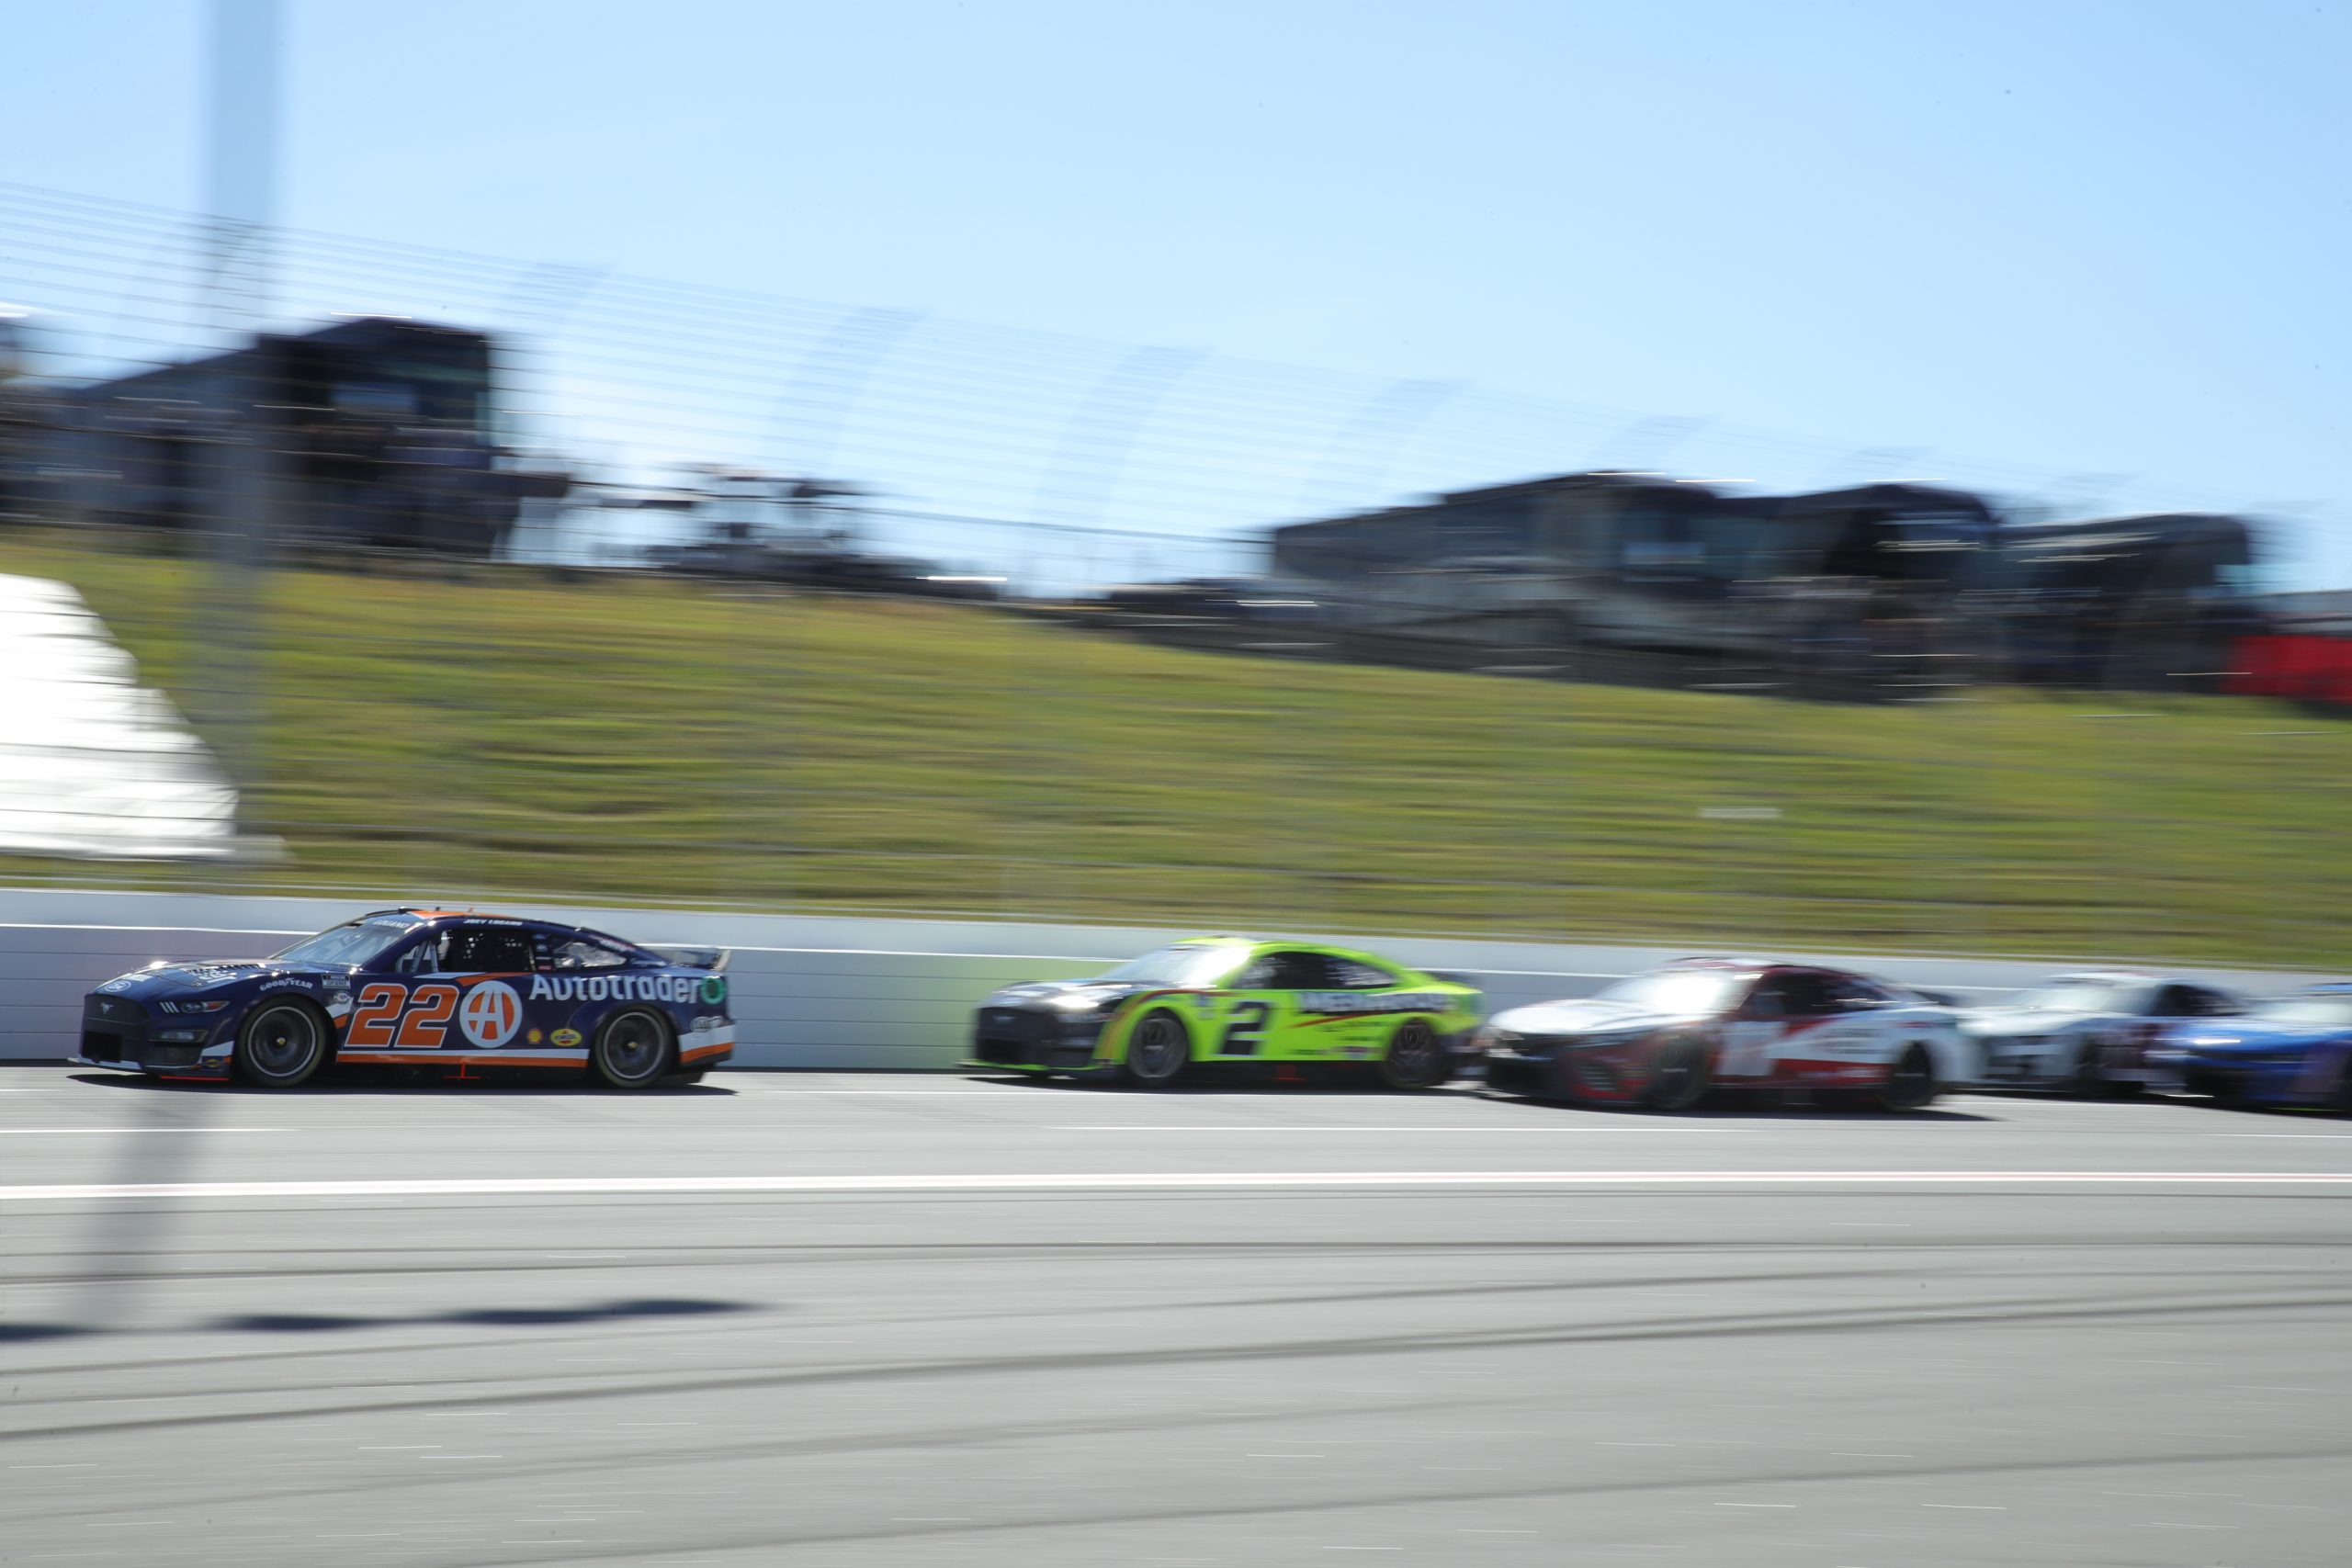 Logano's car was the NASCAR equivalent of Usain Bolt fast. (Photo: Stephen Conley | The Podium Finish)